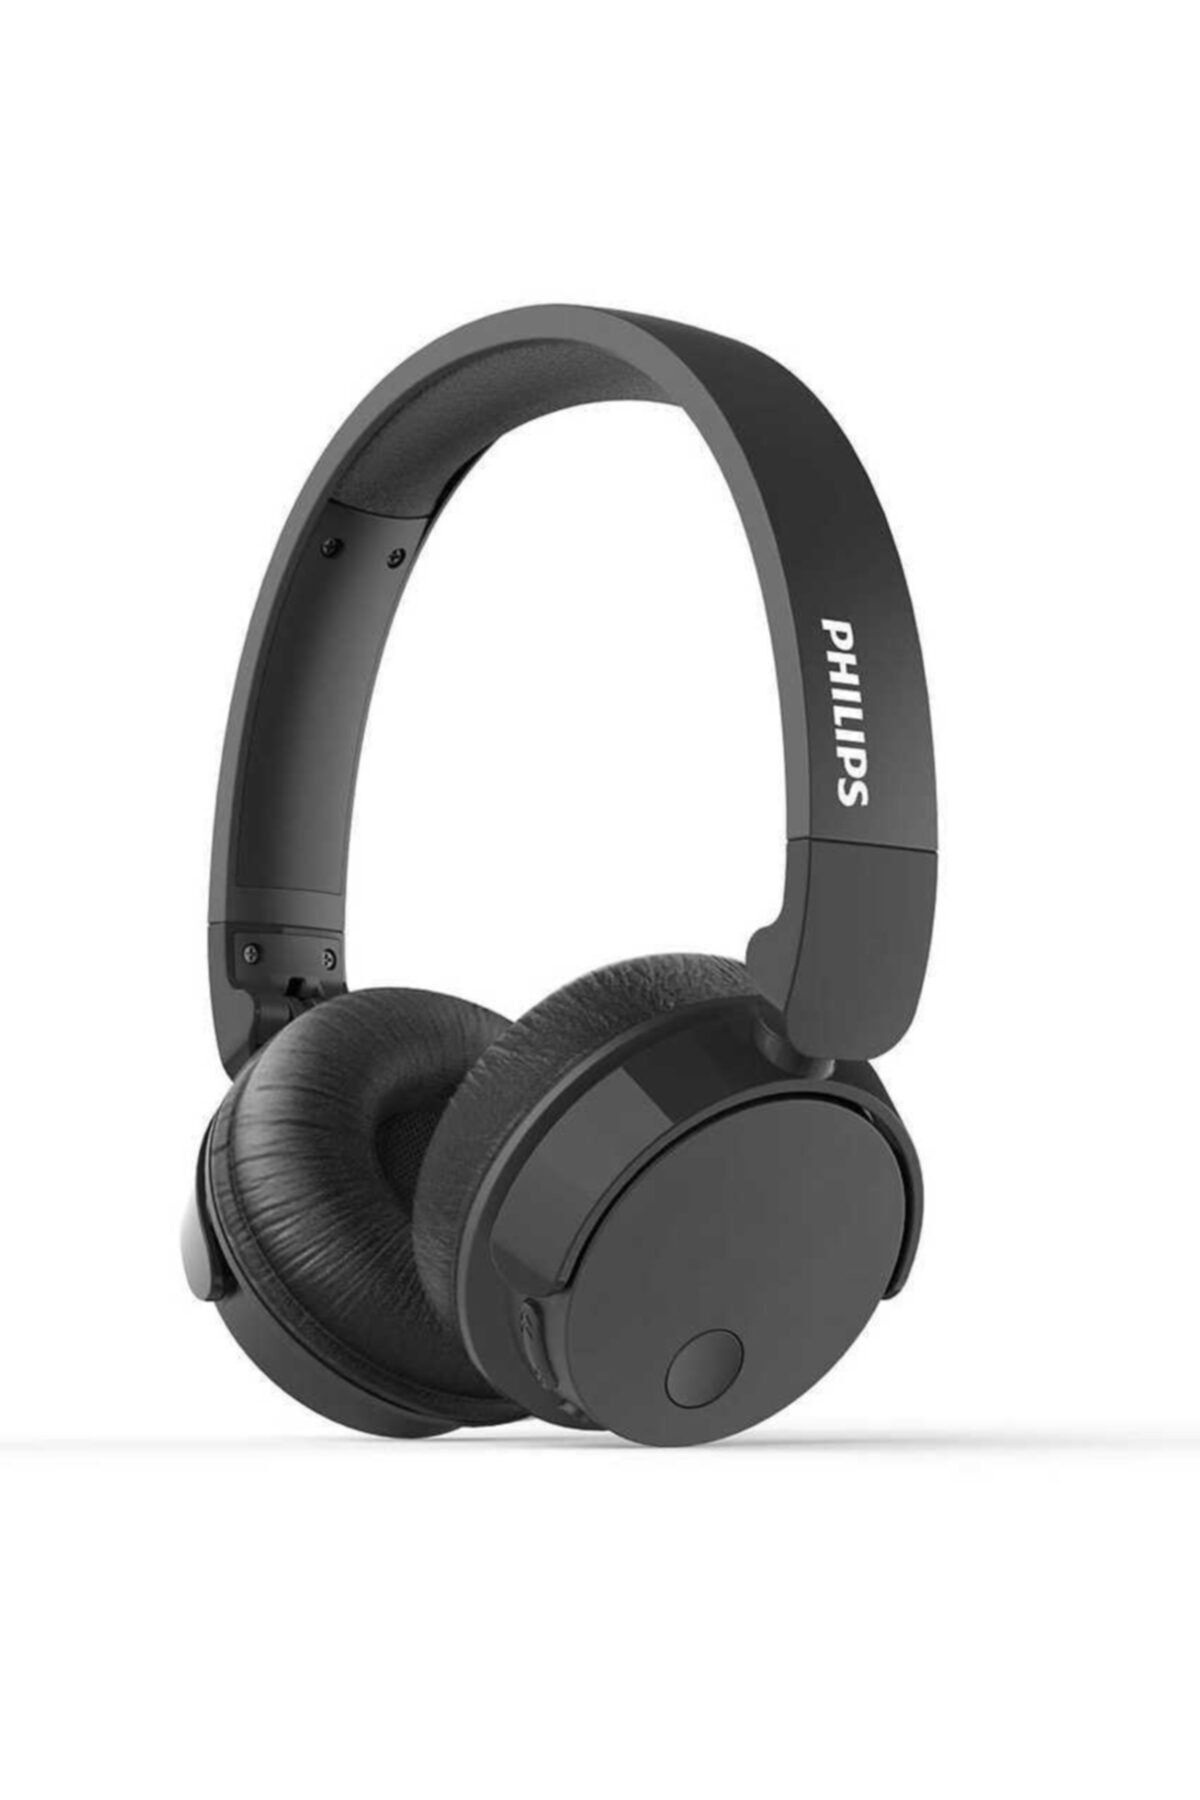 Philips Tabh305bk Bass Aktif Gürültü Önleme Anc Kablosuz Siyah Kulak Üstü Bluetooth Kulaklık